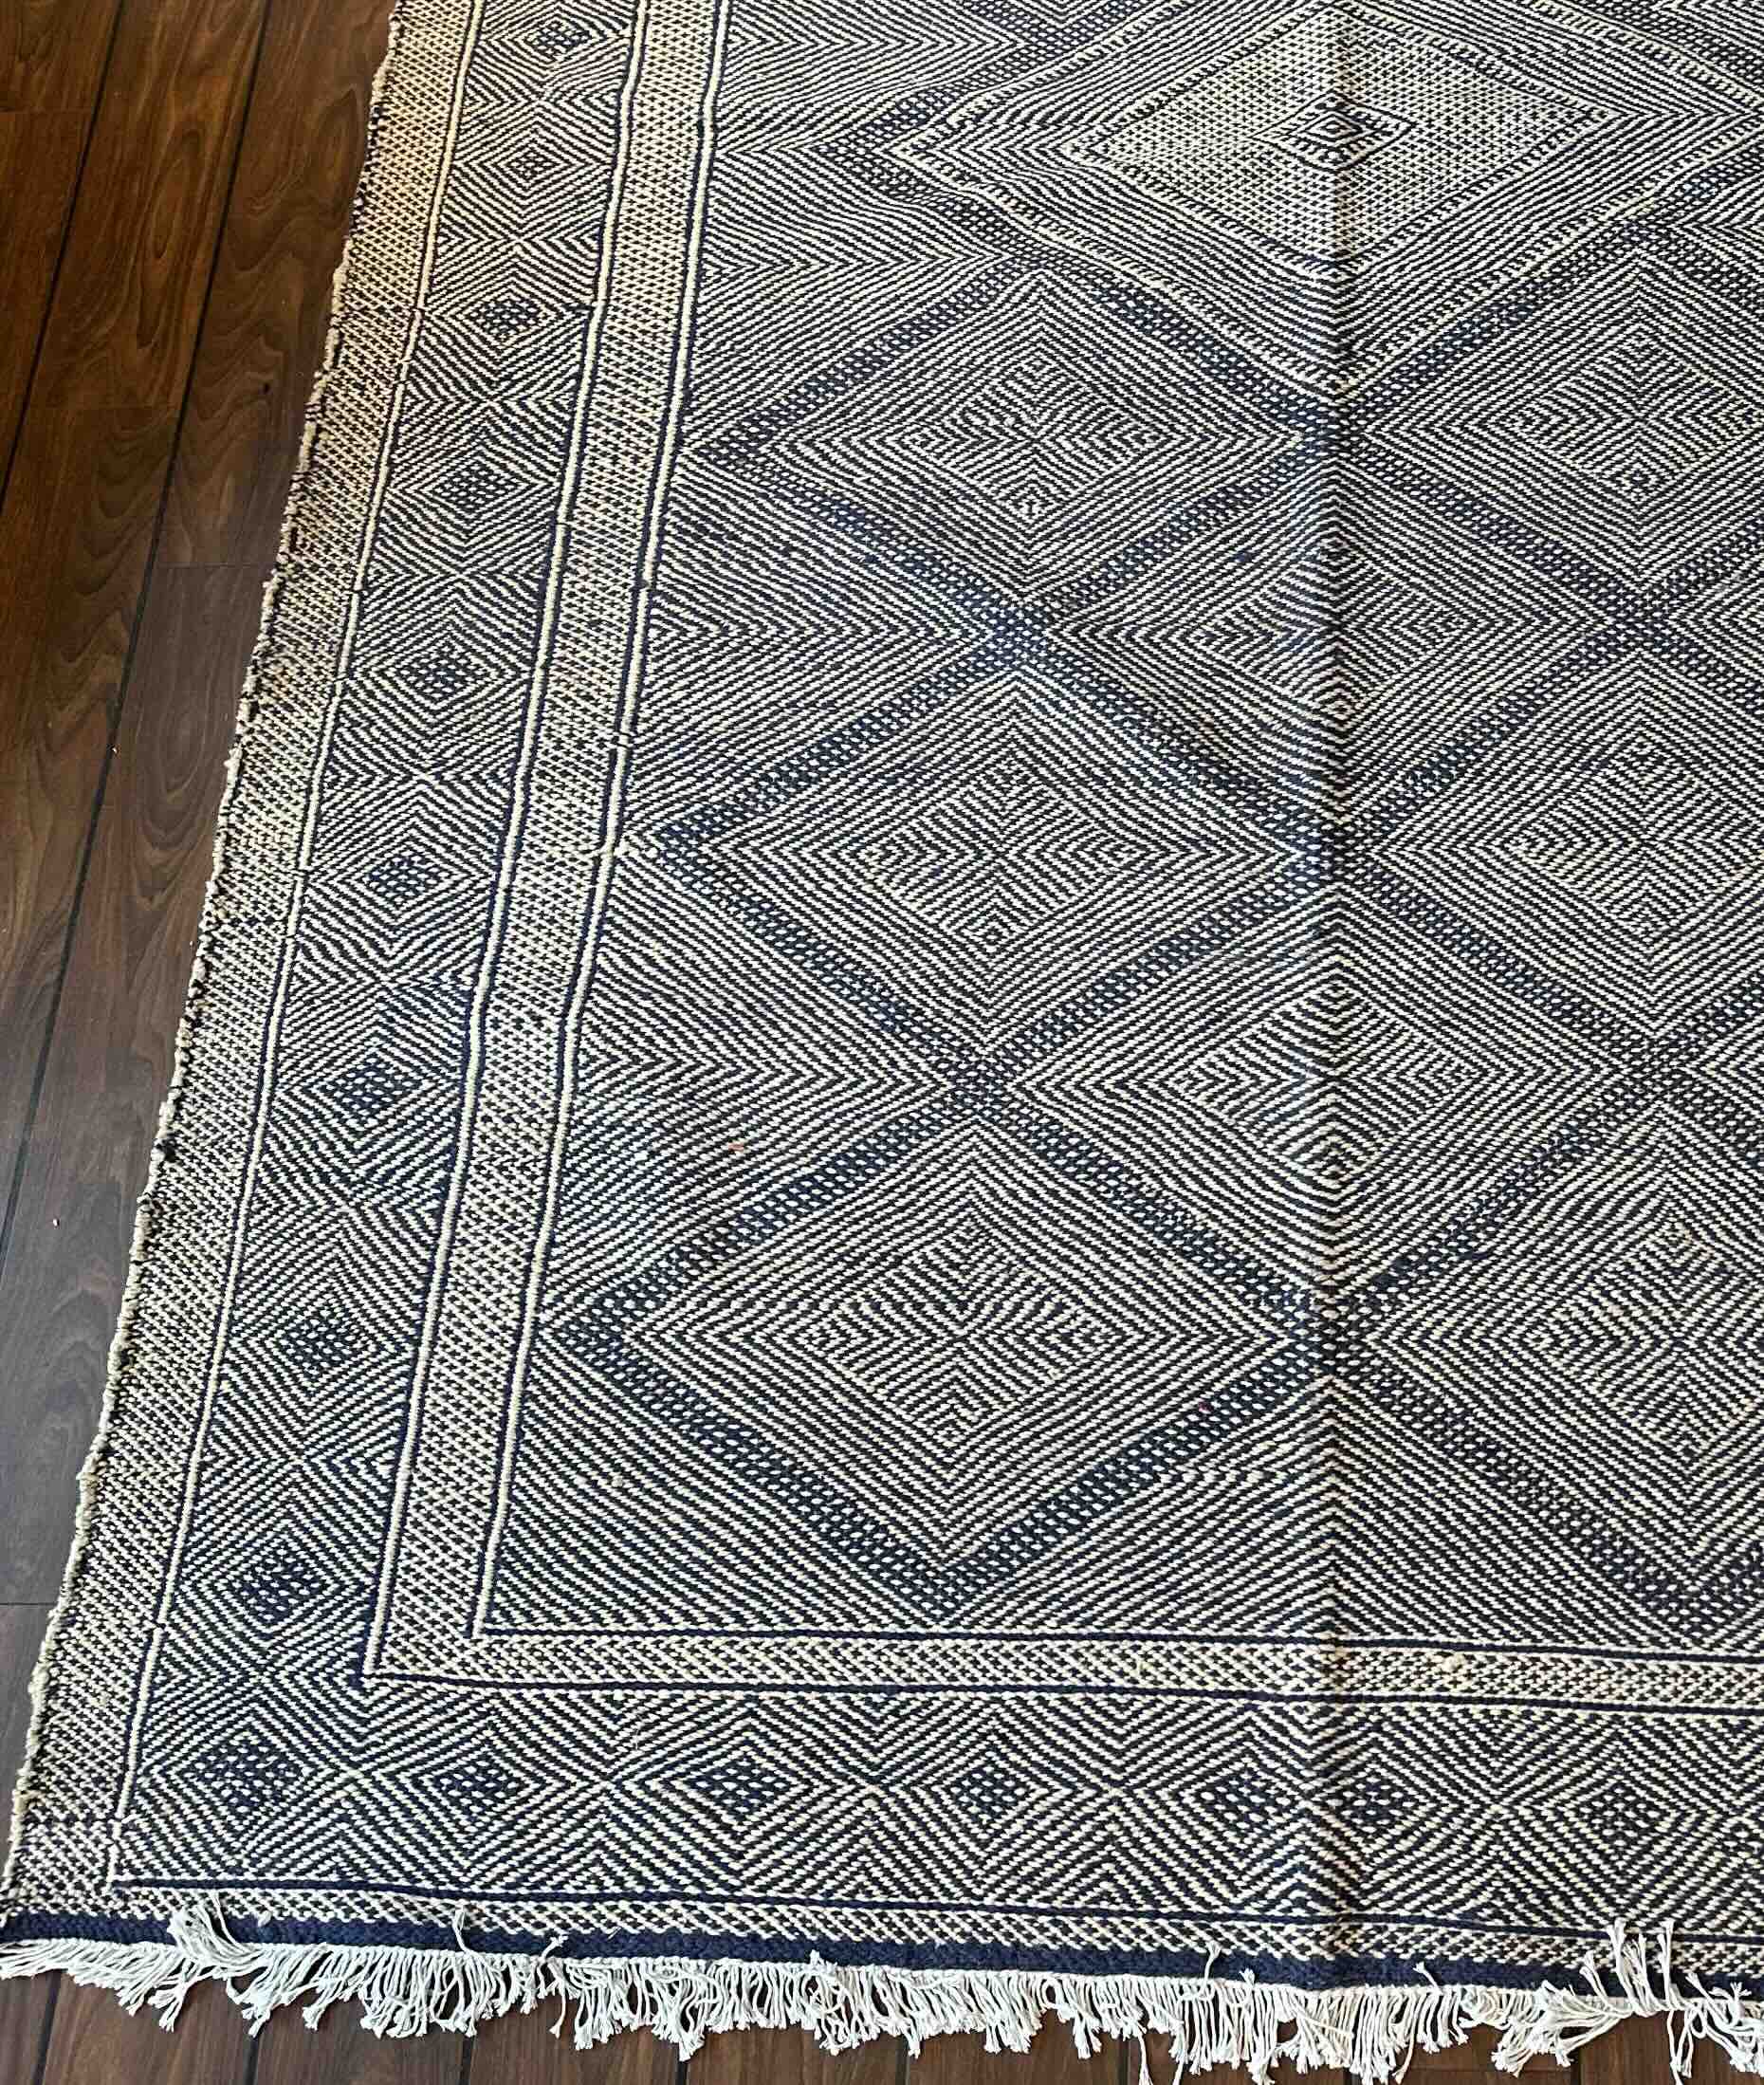 Stor Marrokansk uld gulvtæppe i Blå og Hvid farver.